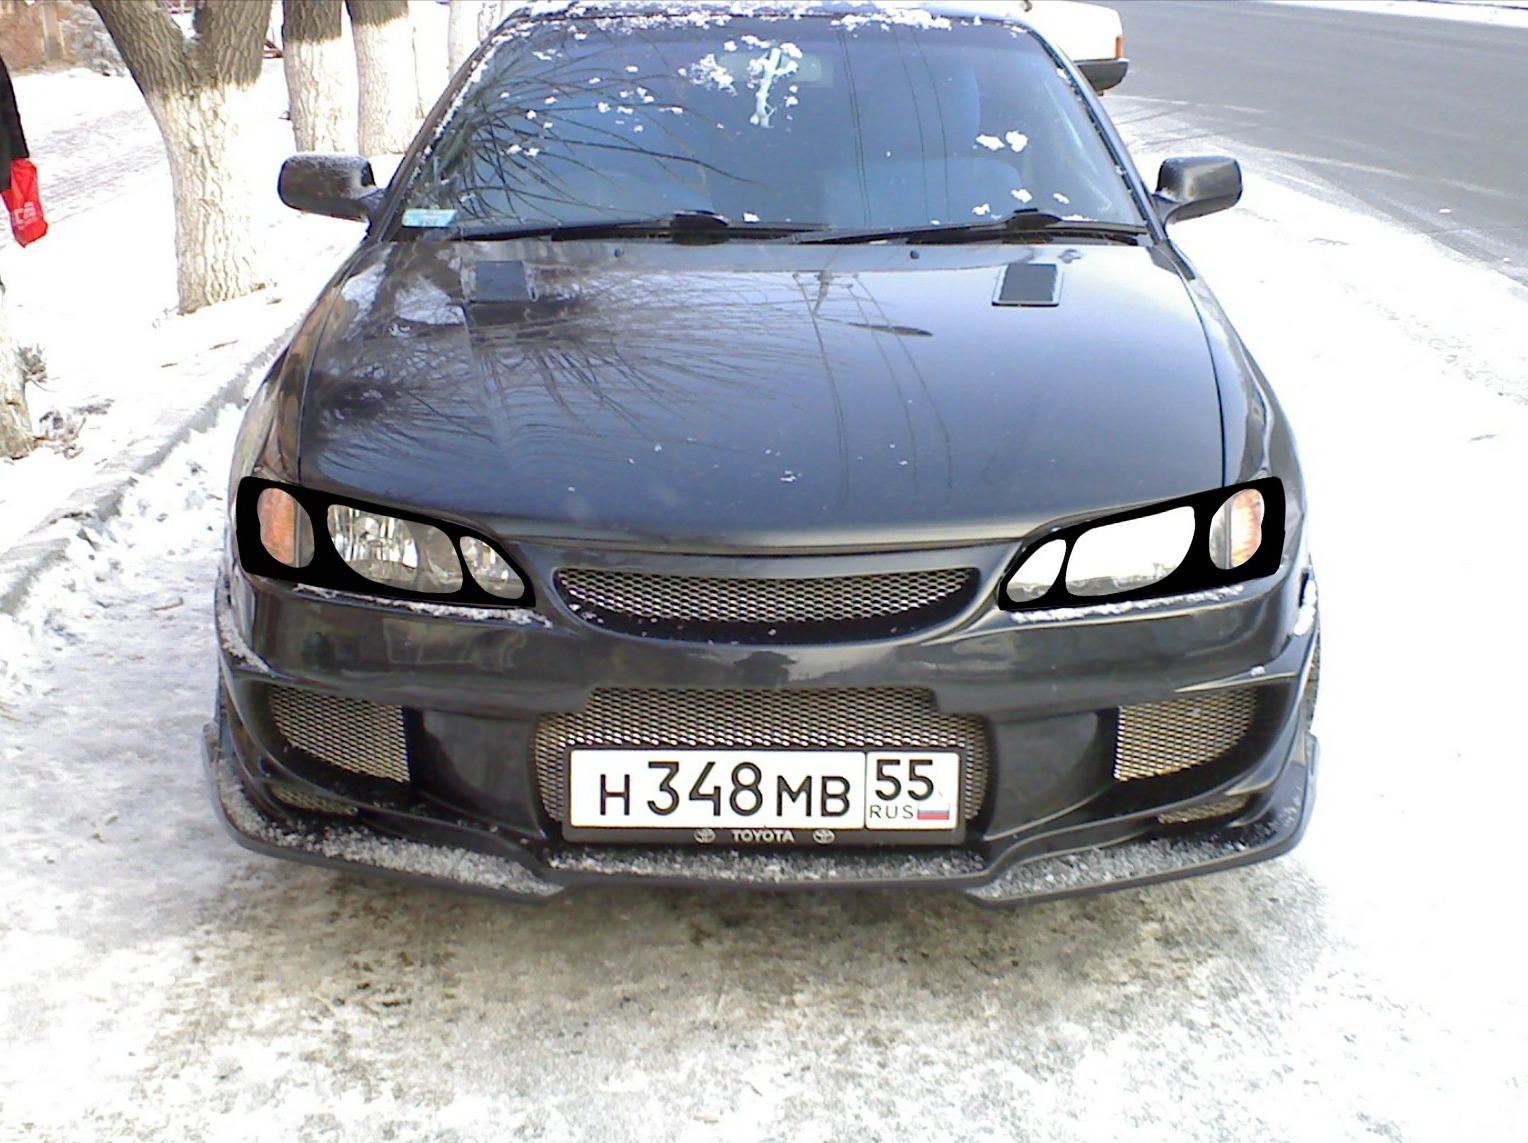     Toyota Corolla Levin 16 1996